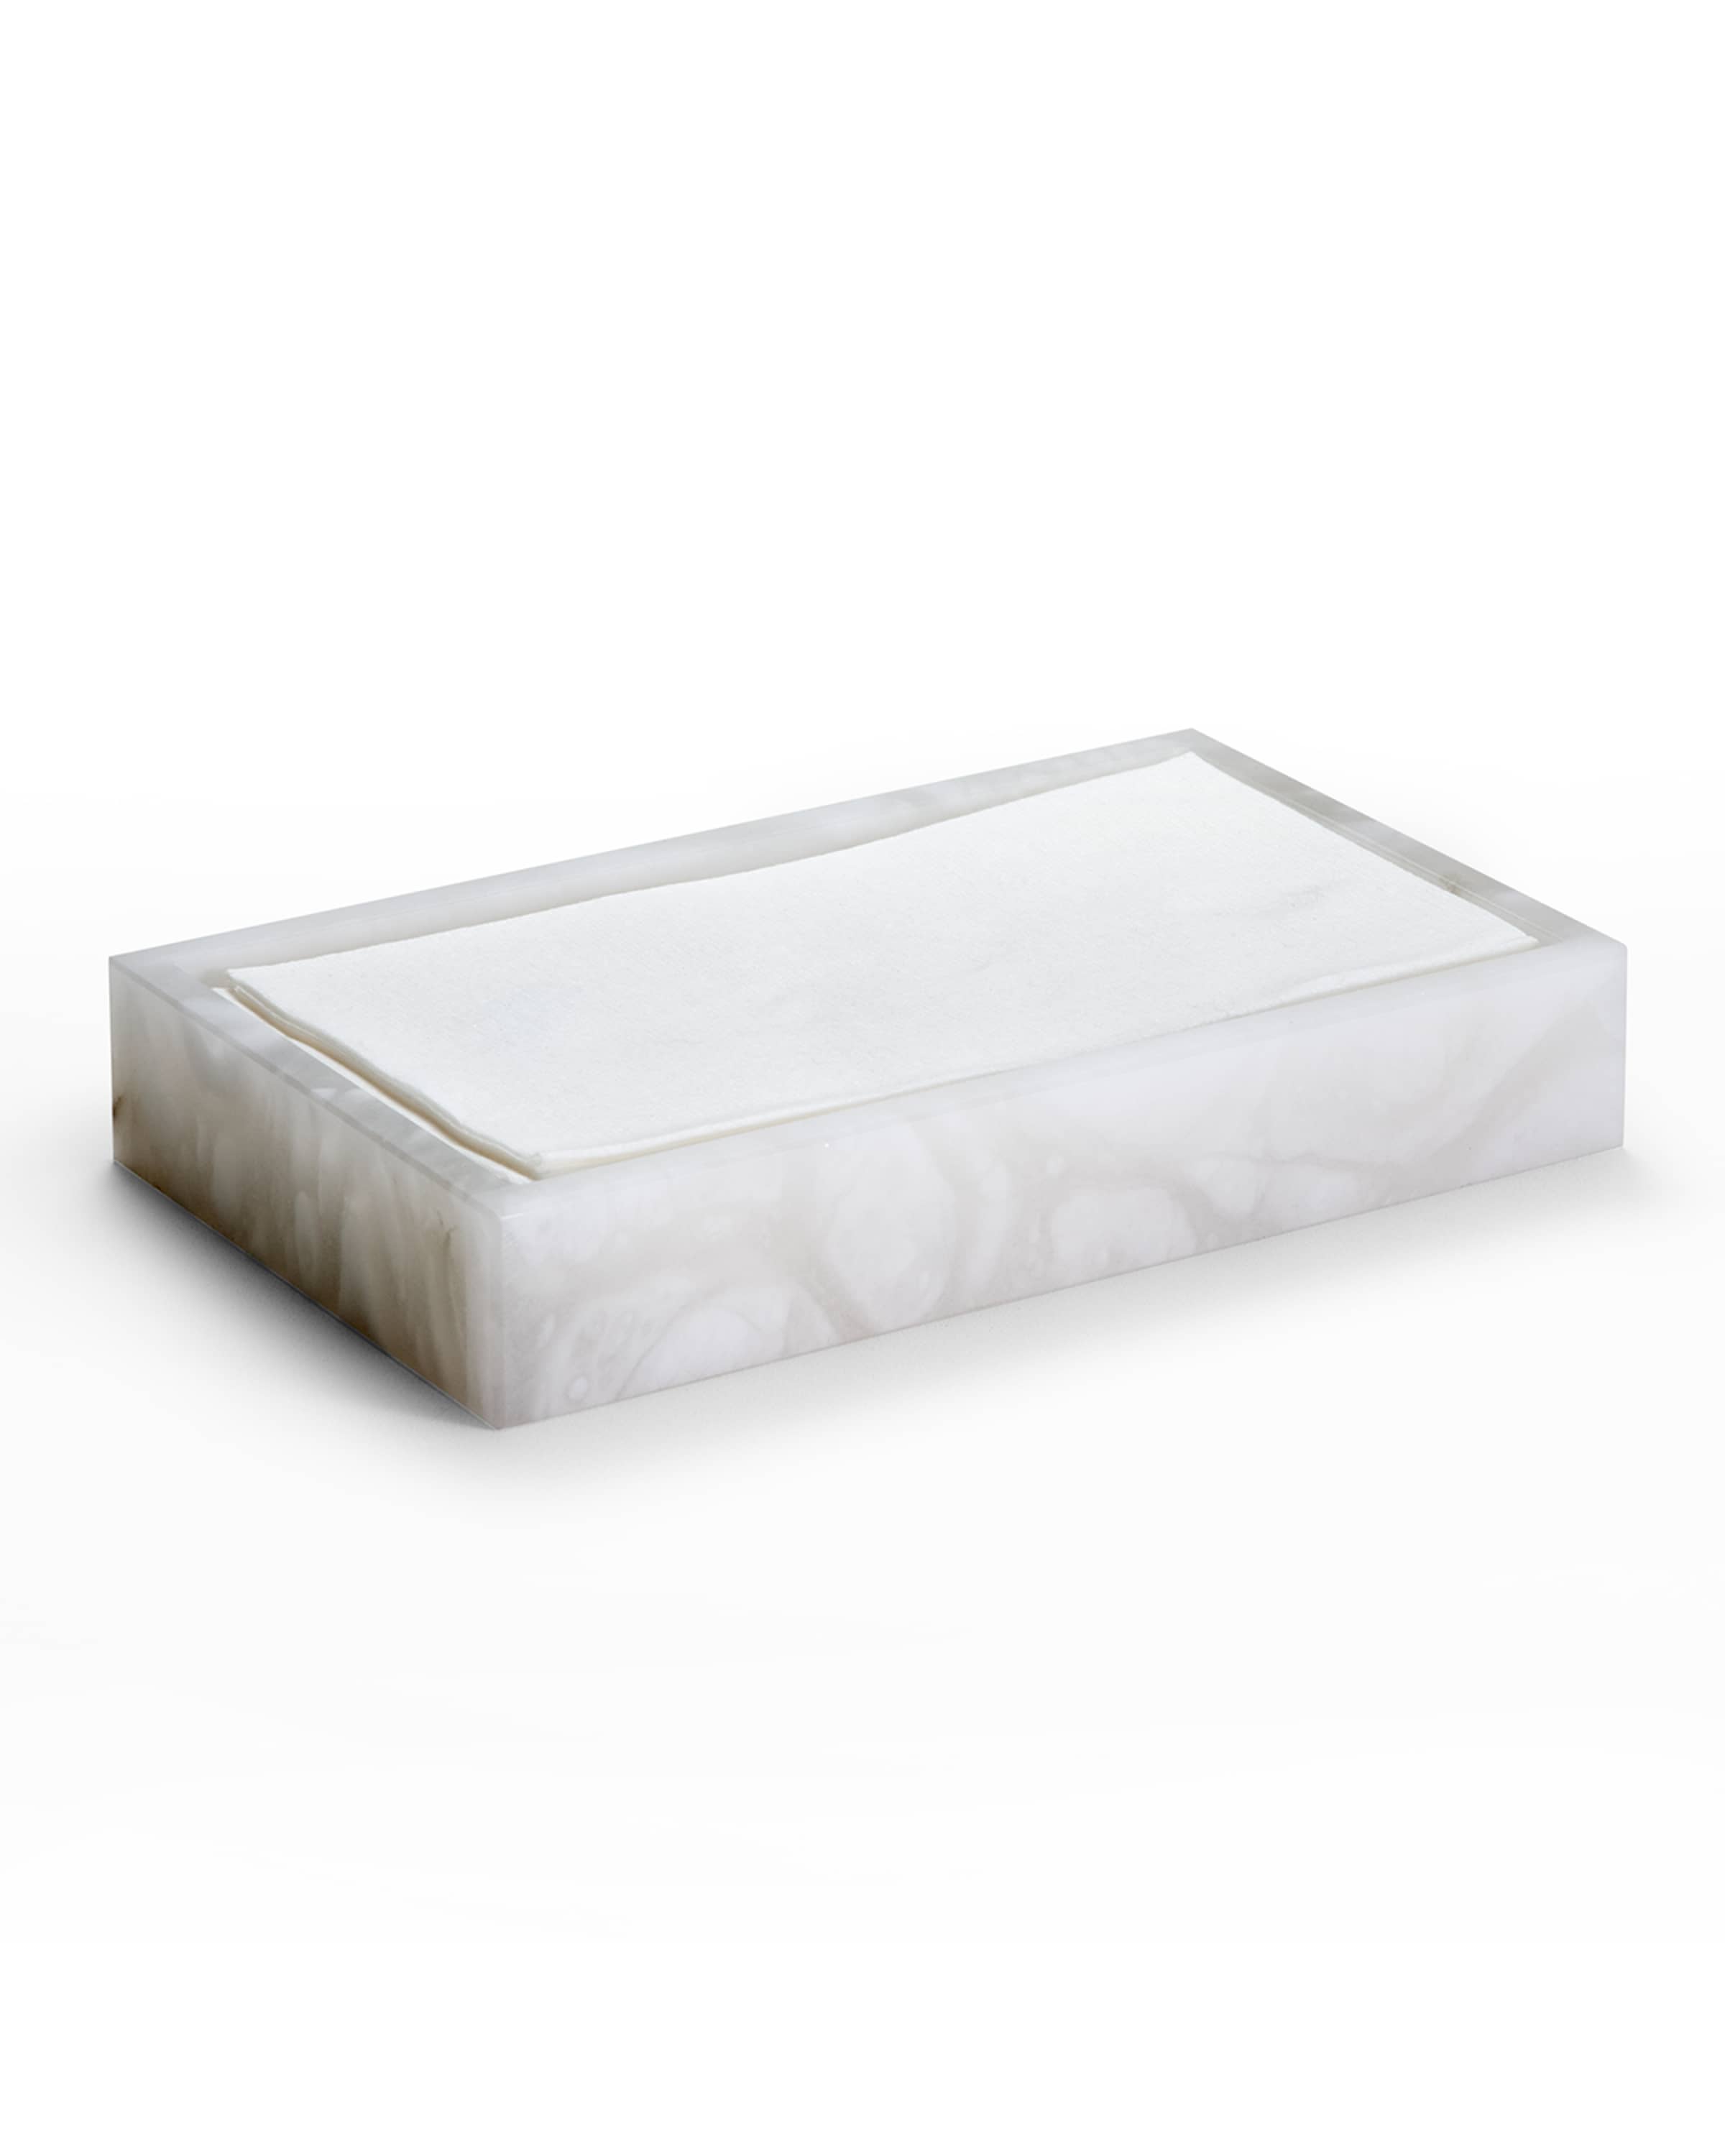 Labrazel Alisa Alabaster Towel Tray, White